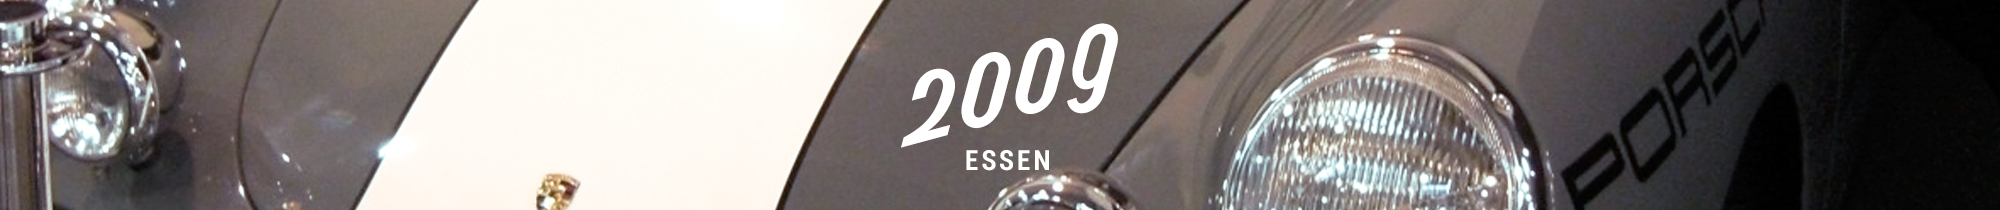 2009-essen-slidi-01